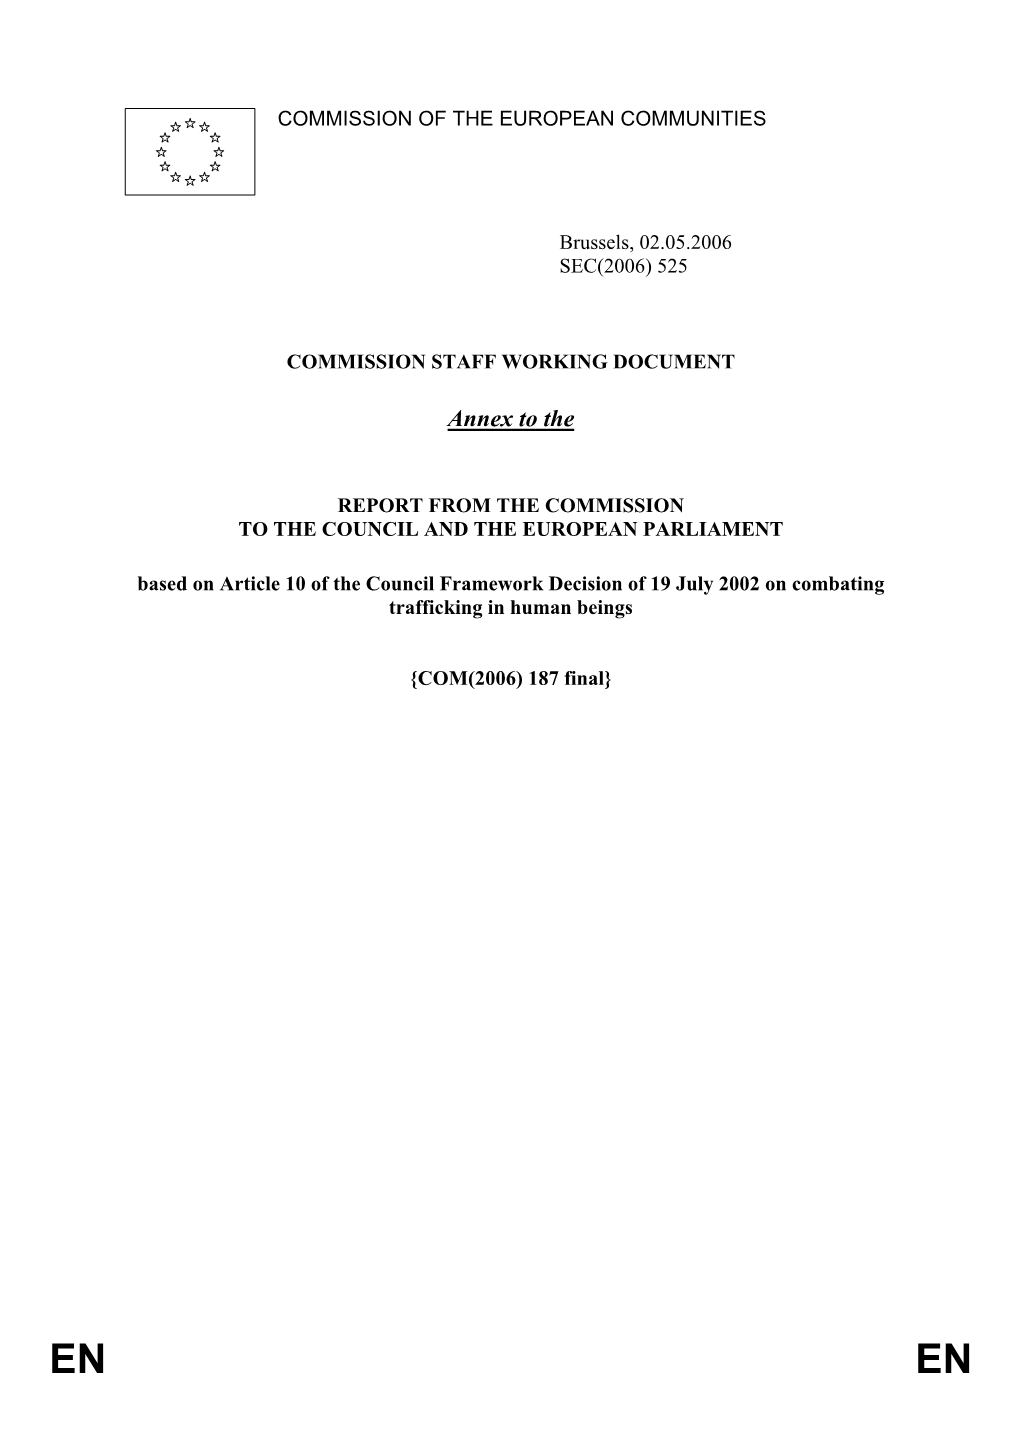 Sec 2006/525 Annex to Report on Article 10 EN.Pdf